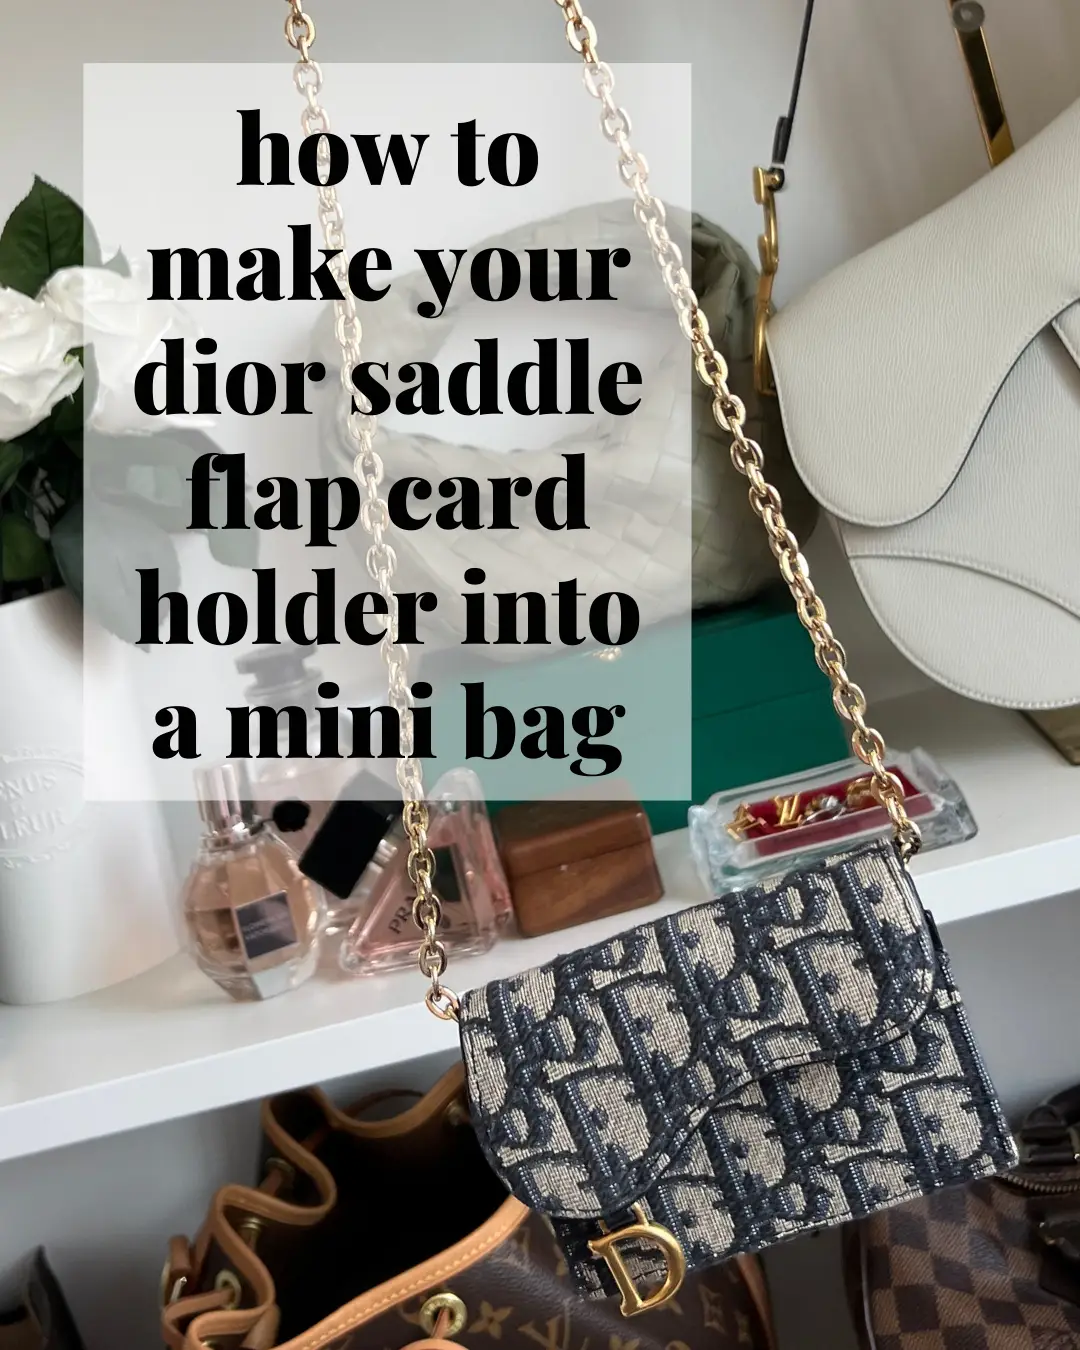 Saddle Flap Card Holder